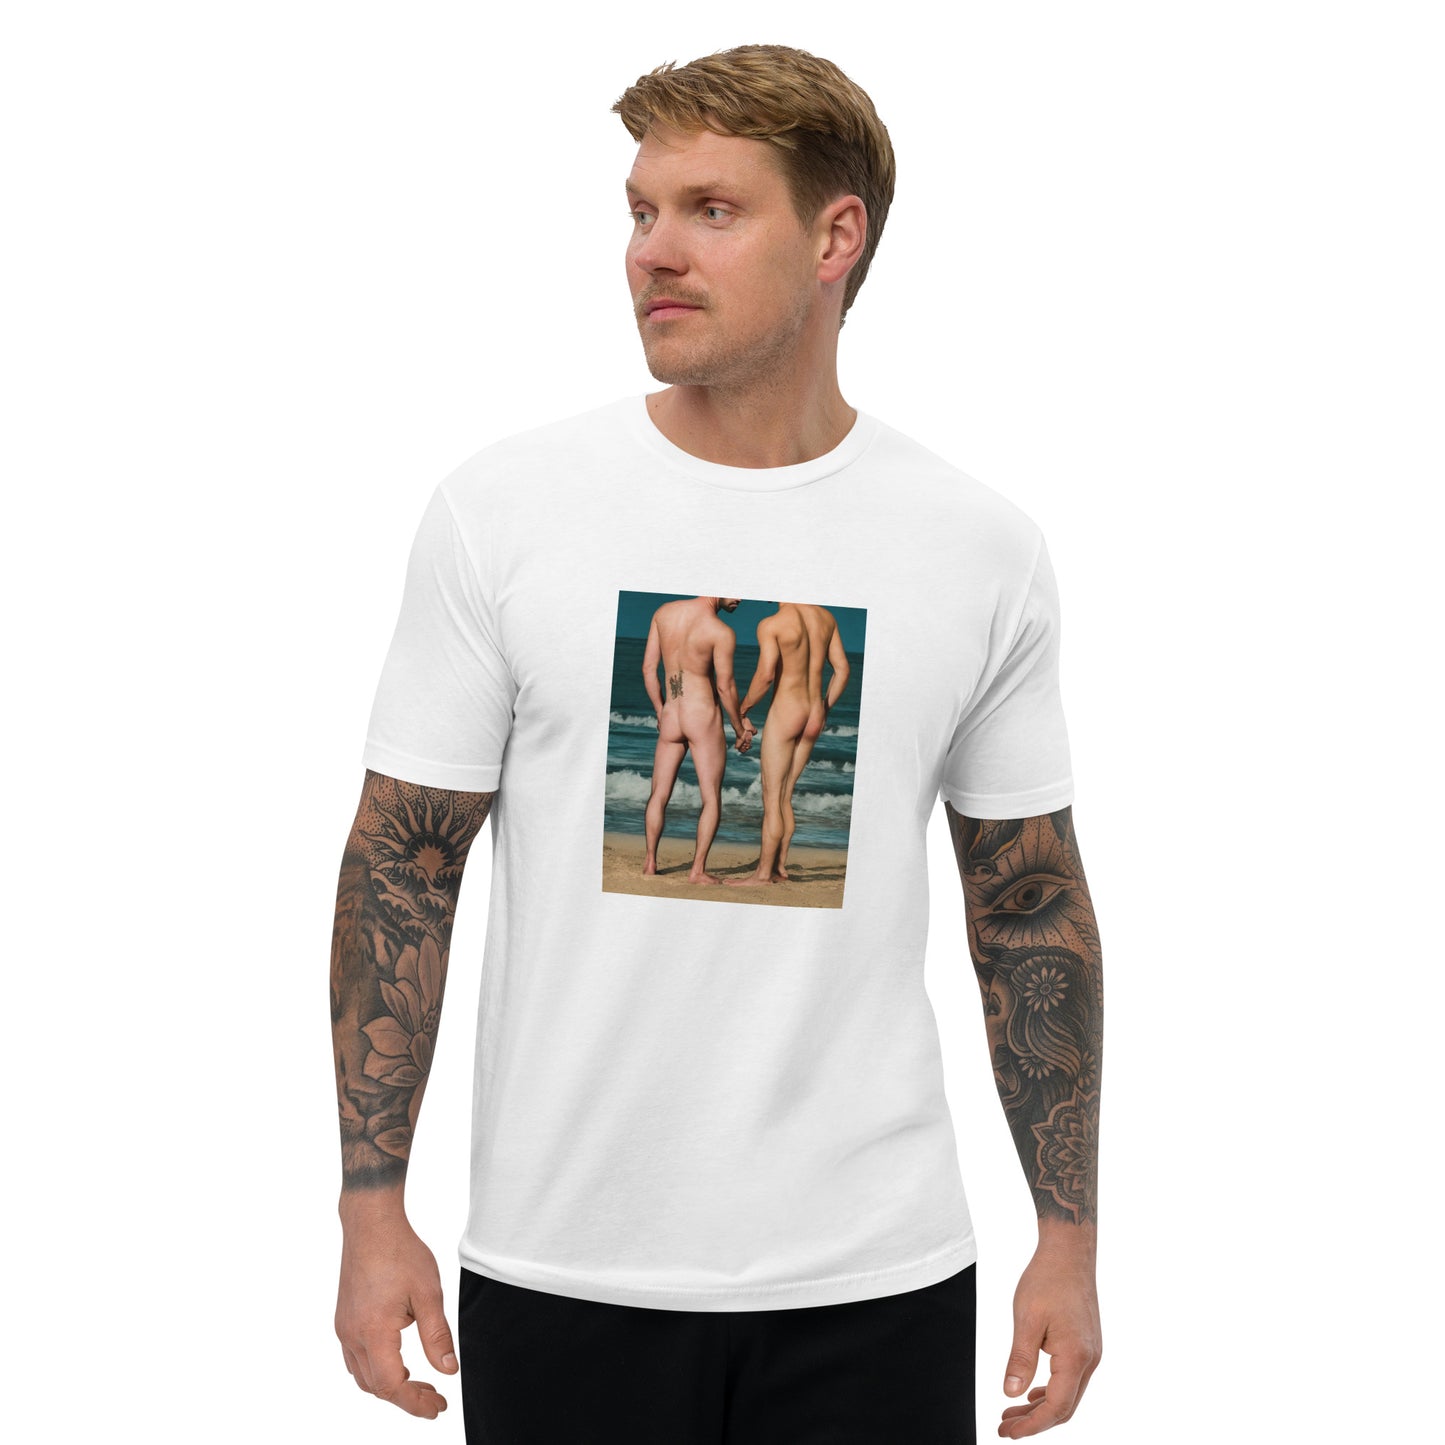 NUDE BEACH T-shirt